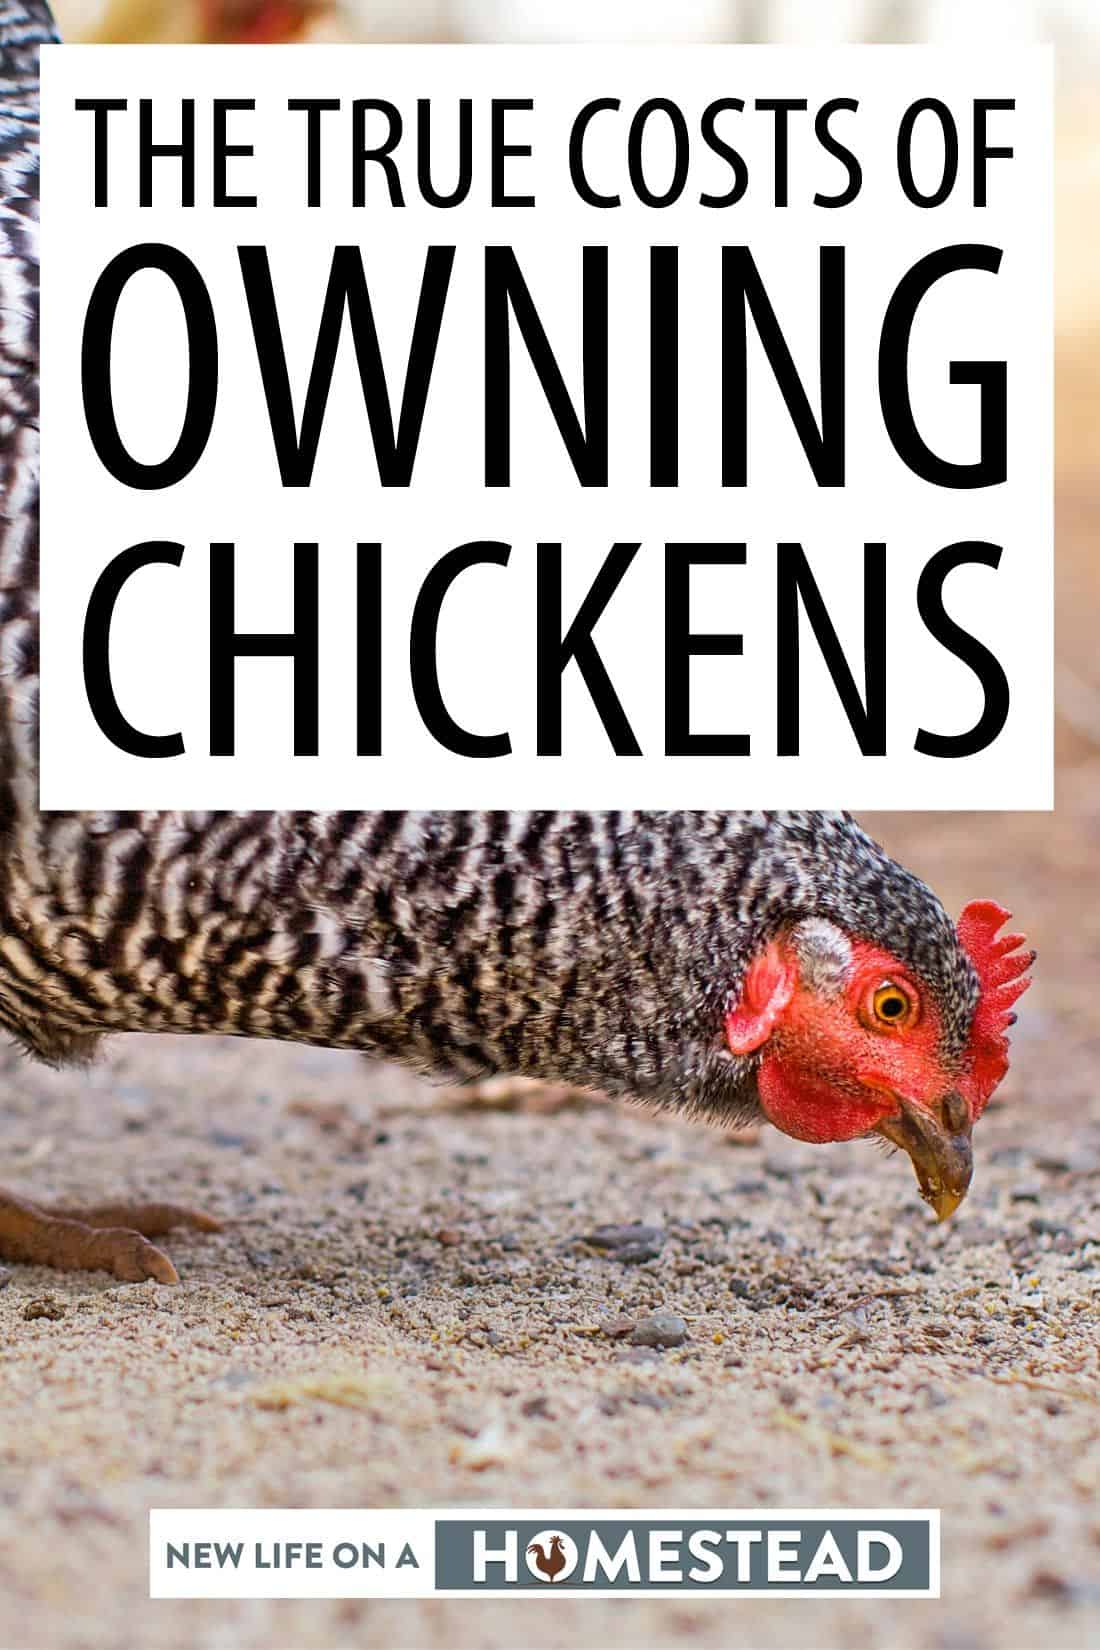 raising chickens costs pinterest